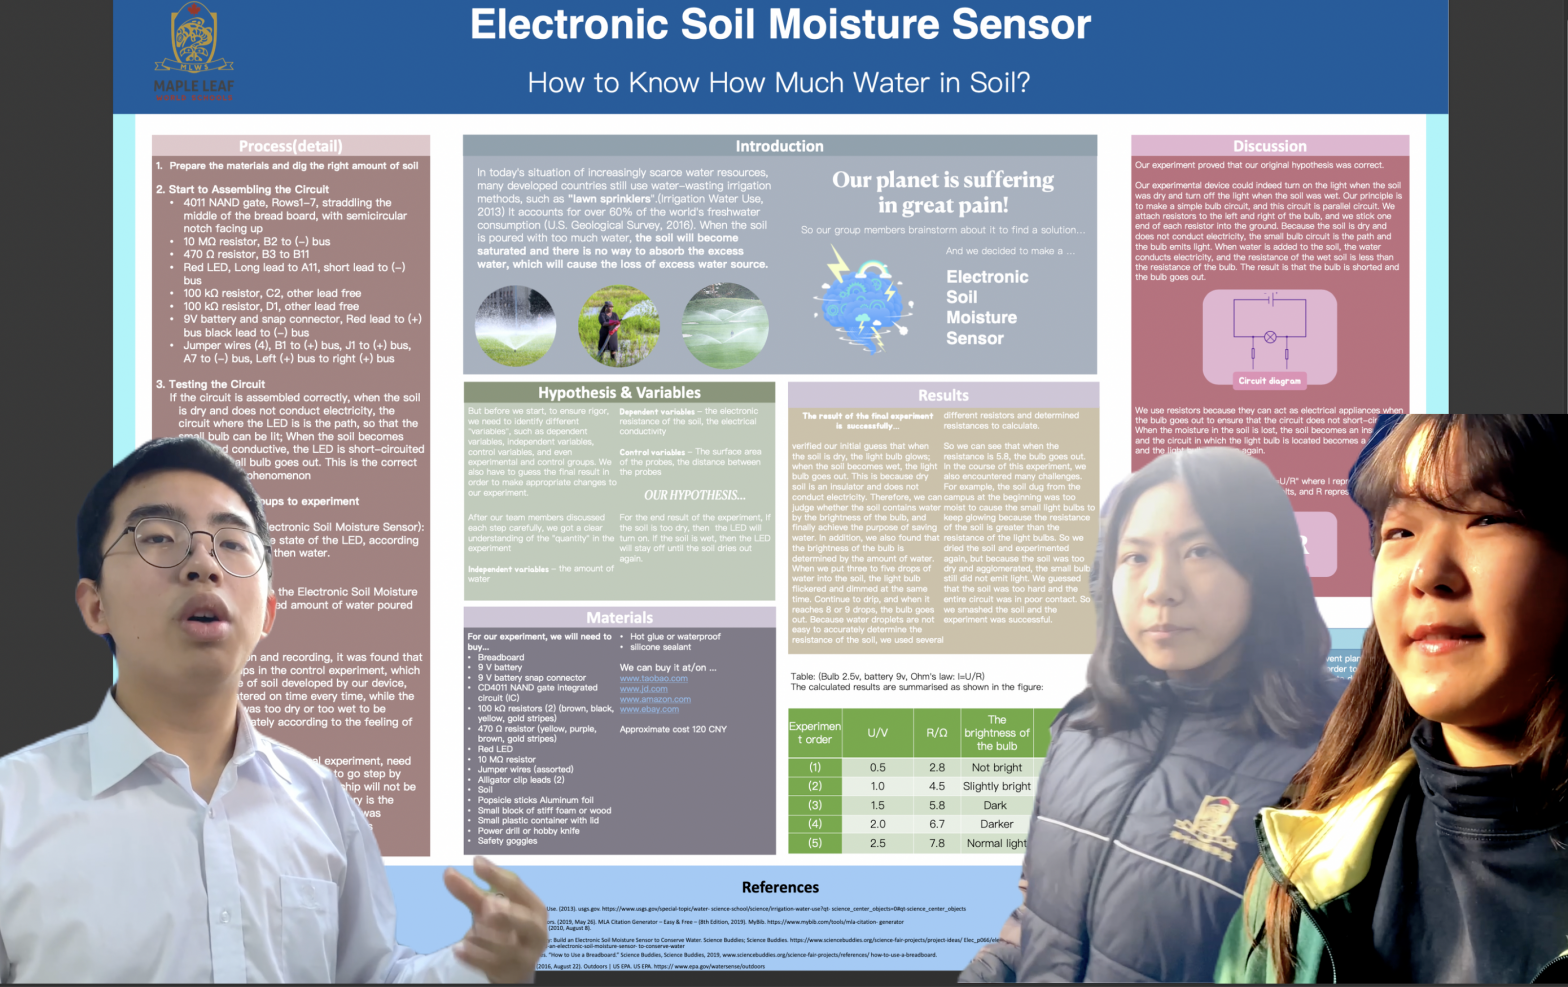 Electronic soil moisture sensor